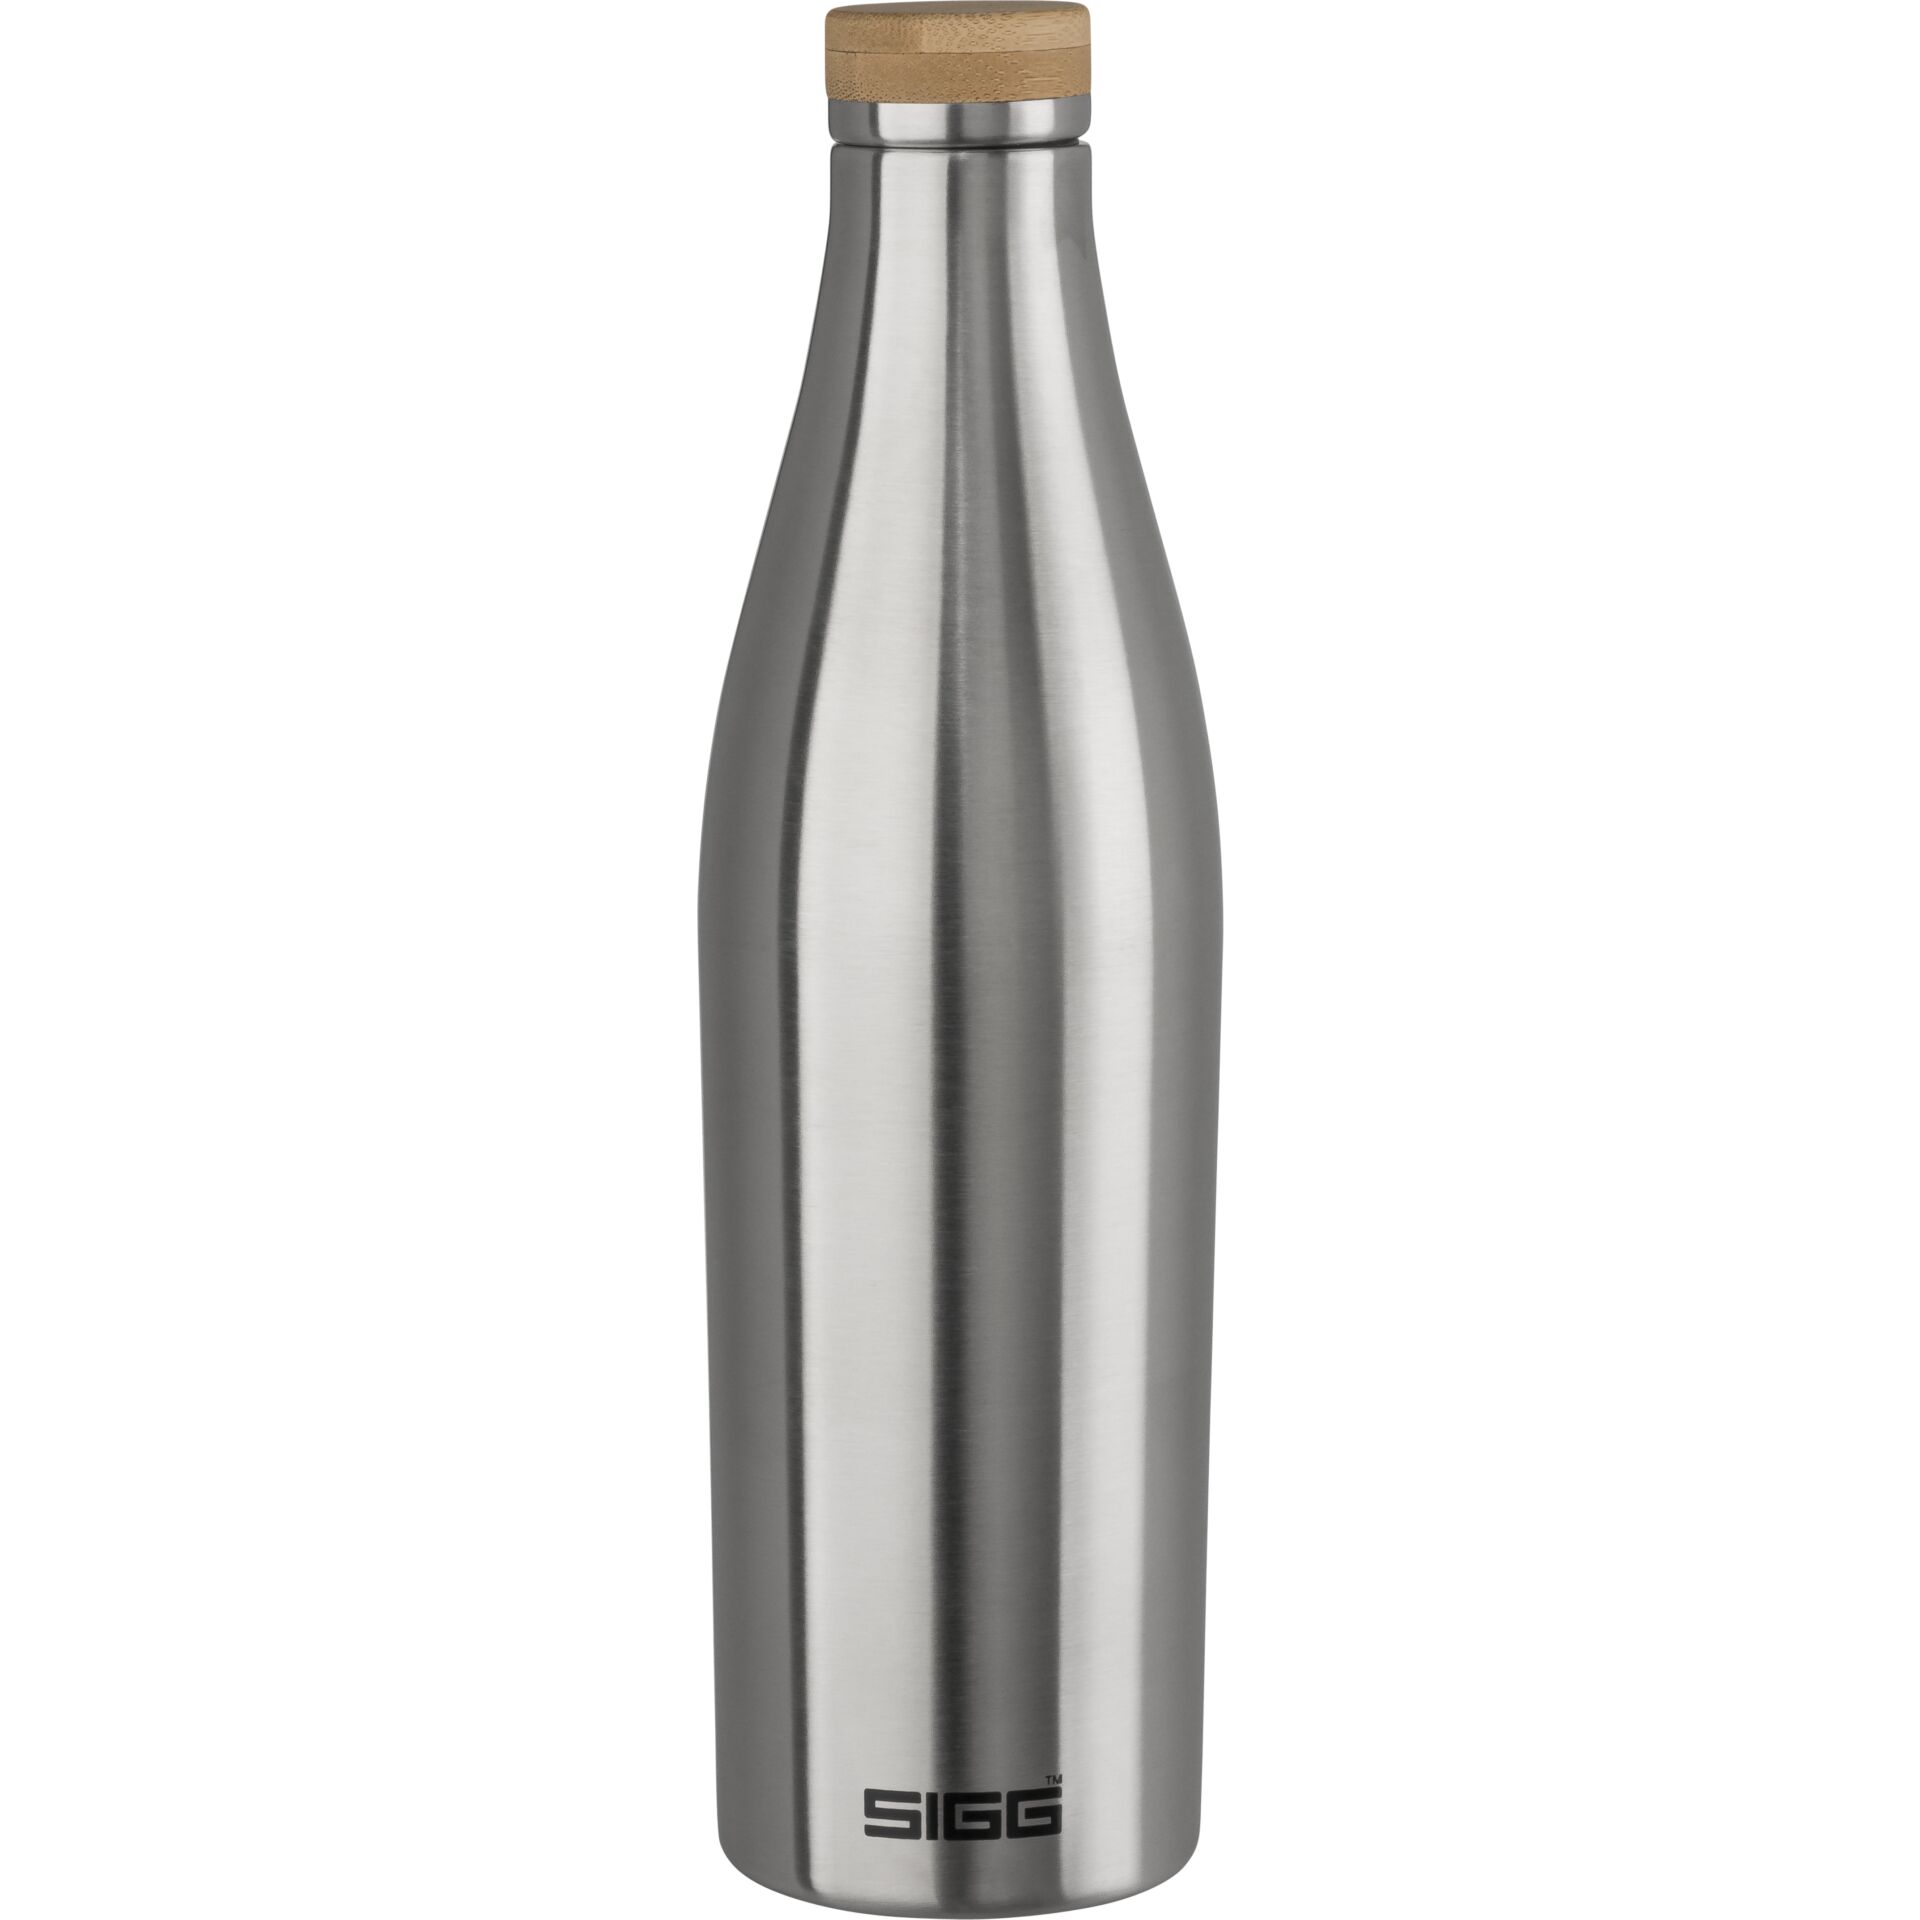 Sigg Meridian bottiglia argento 0.5 L